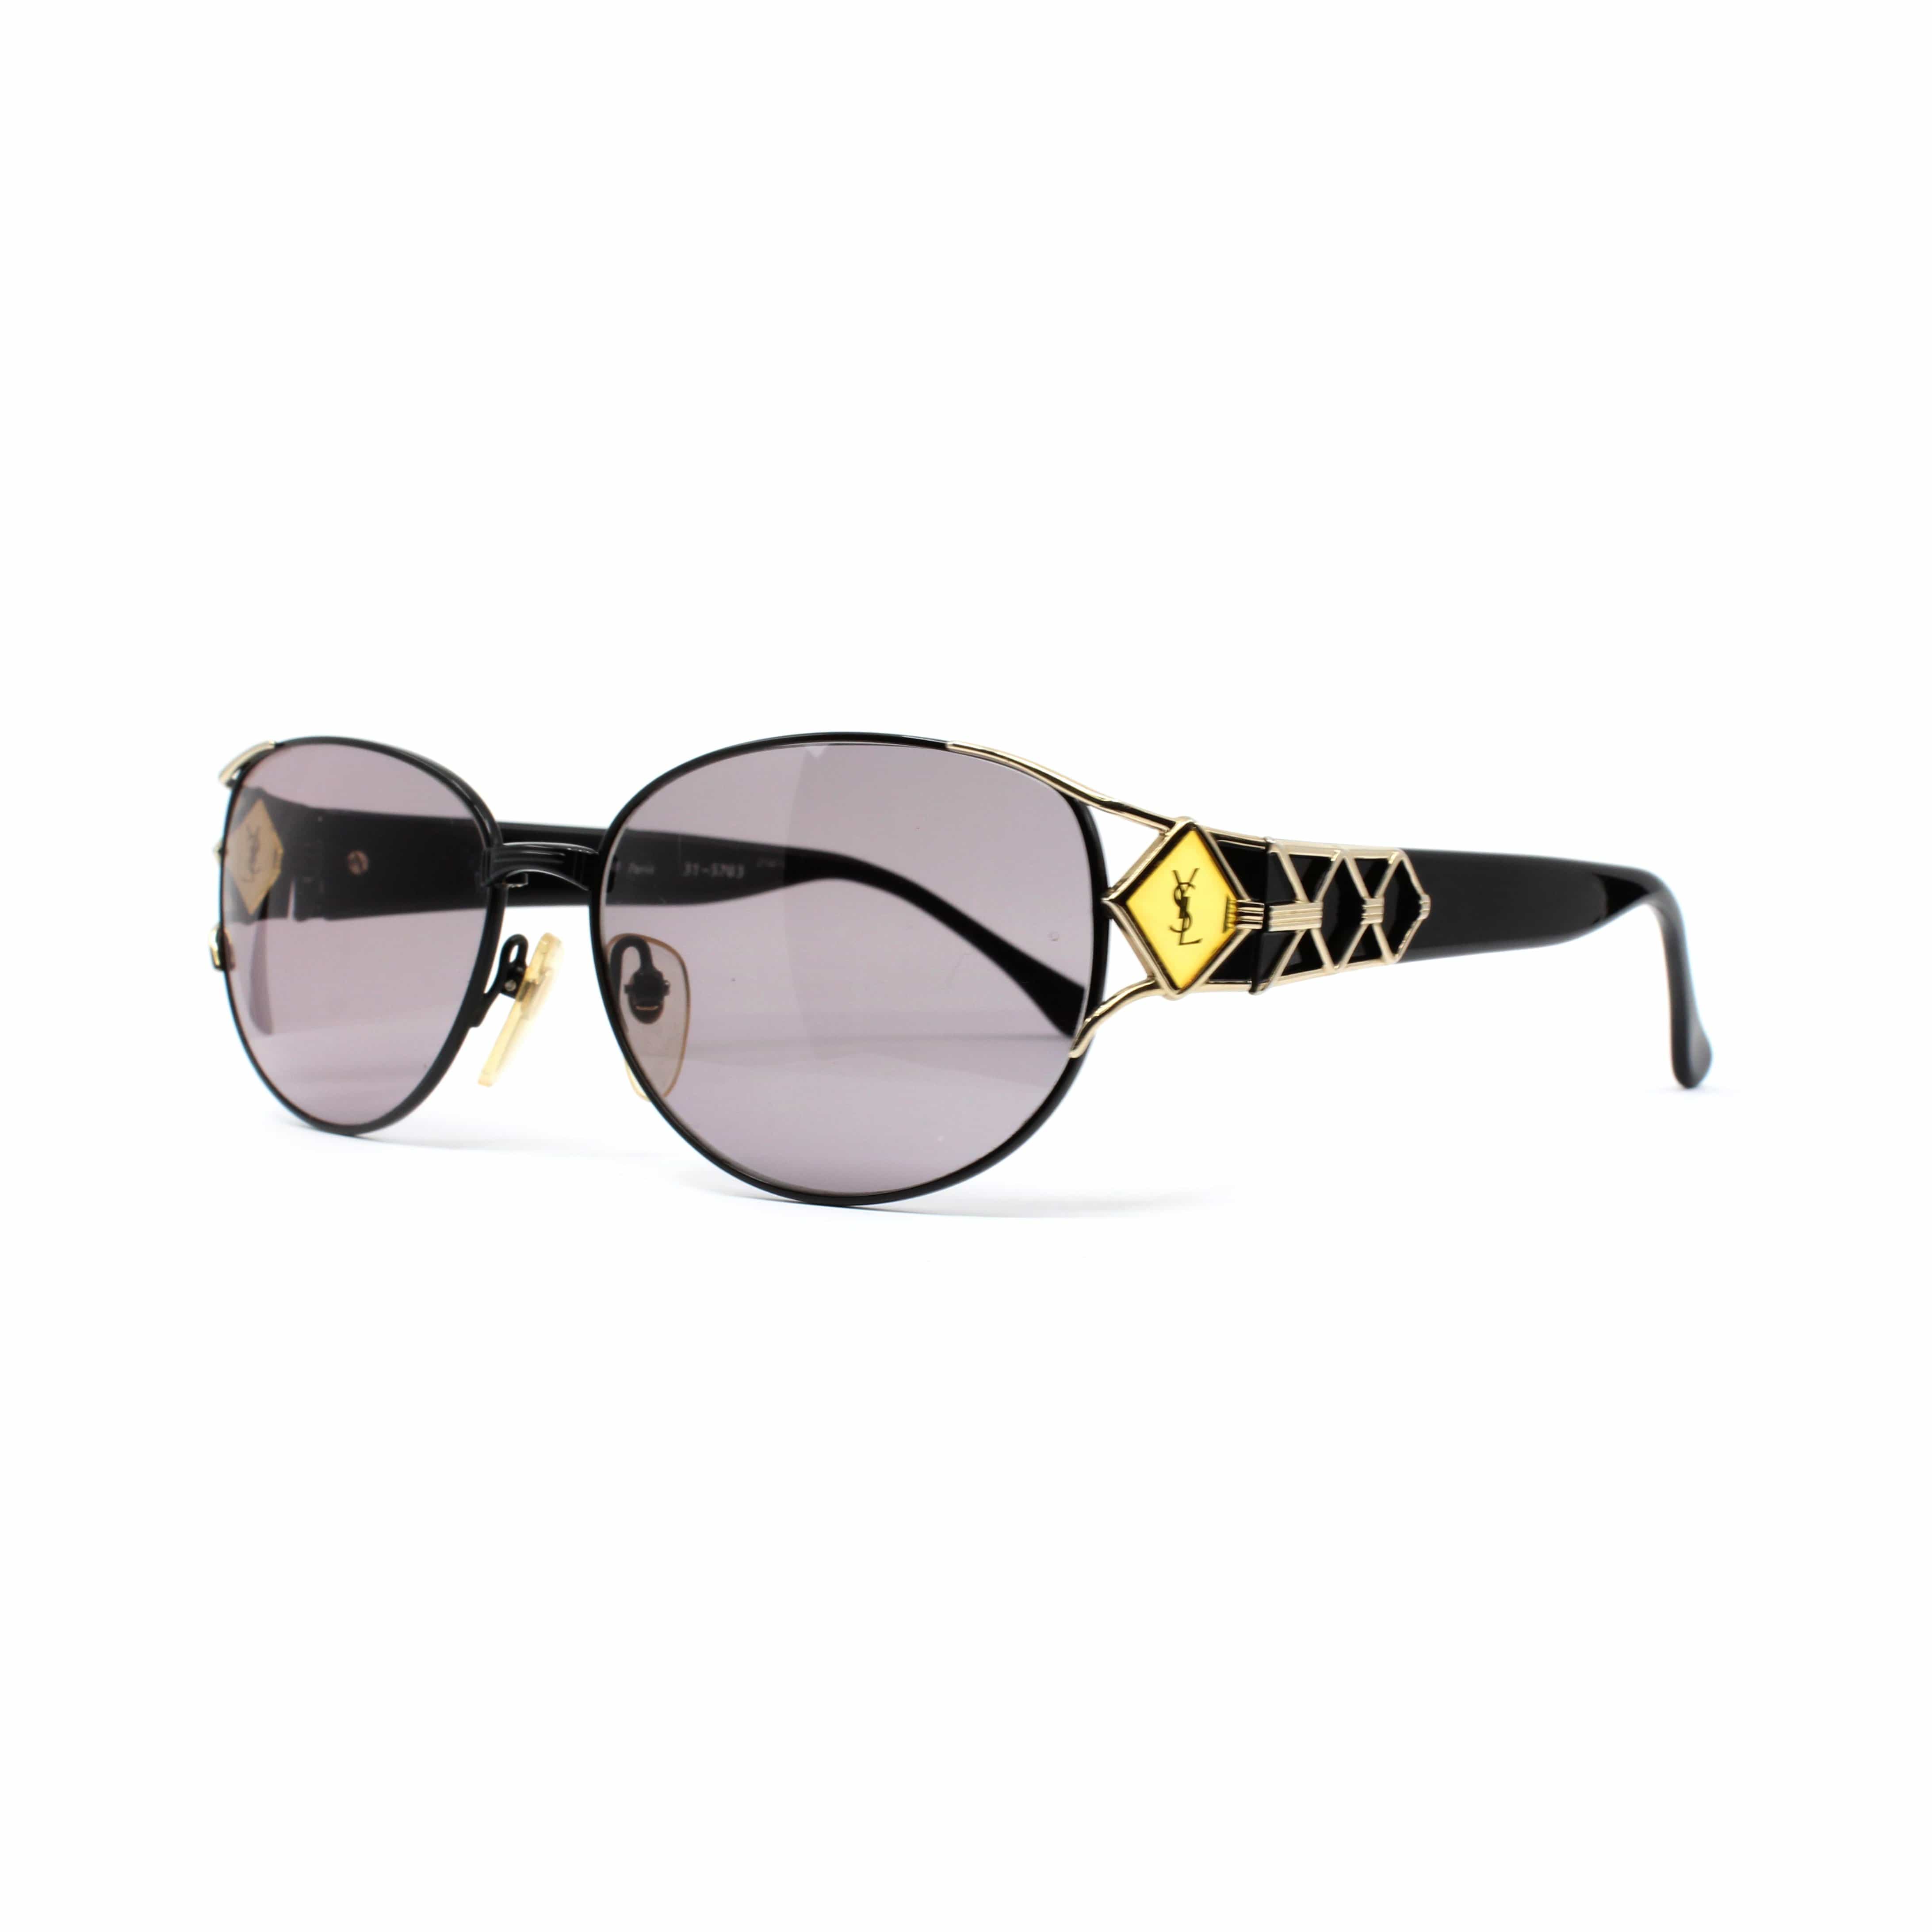 Vintage Yves Saint Laurent 31-5703 Sunglasses